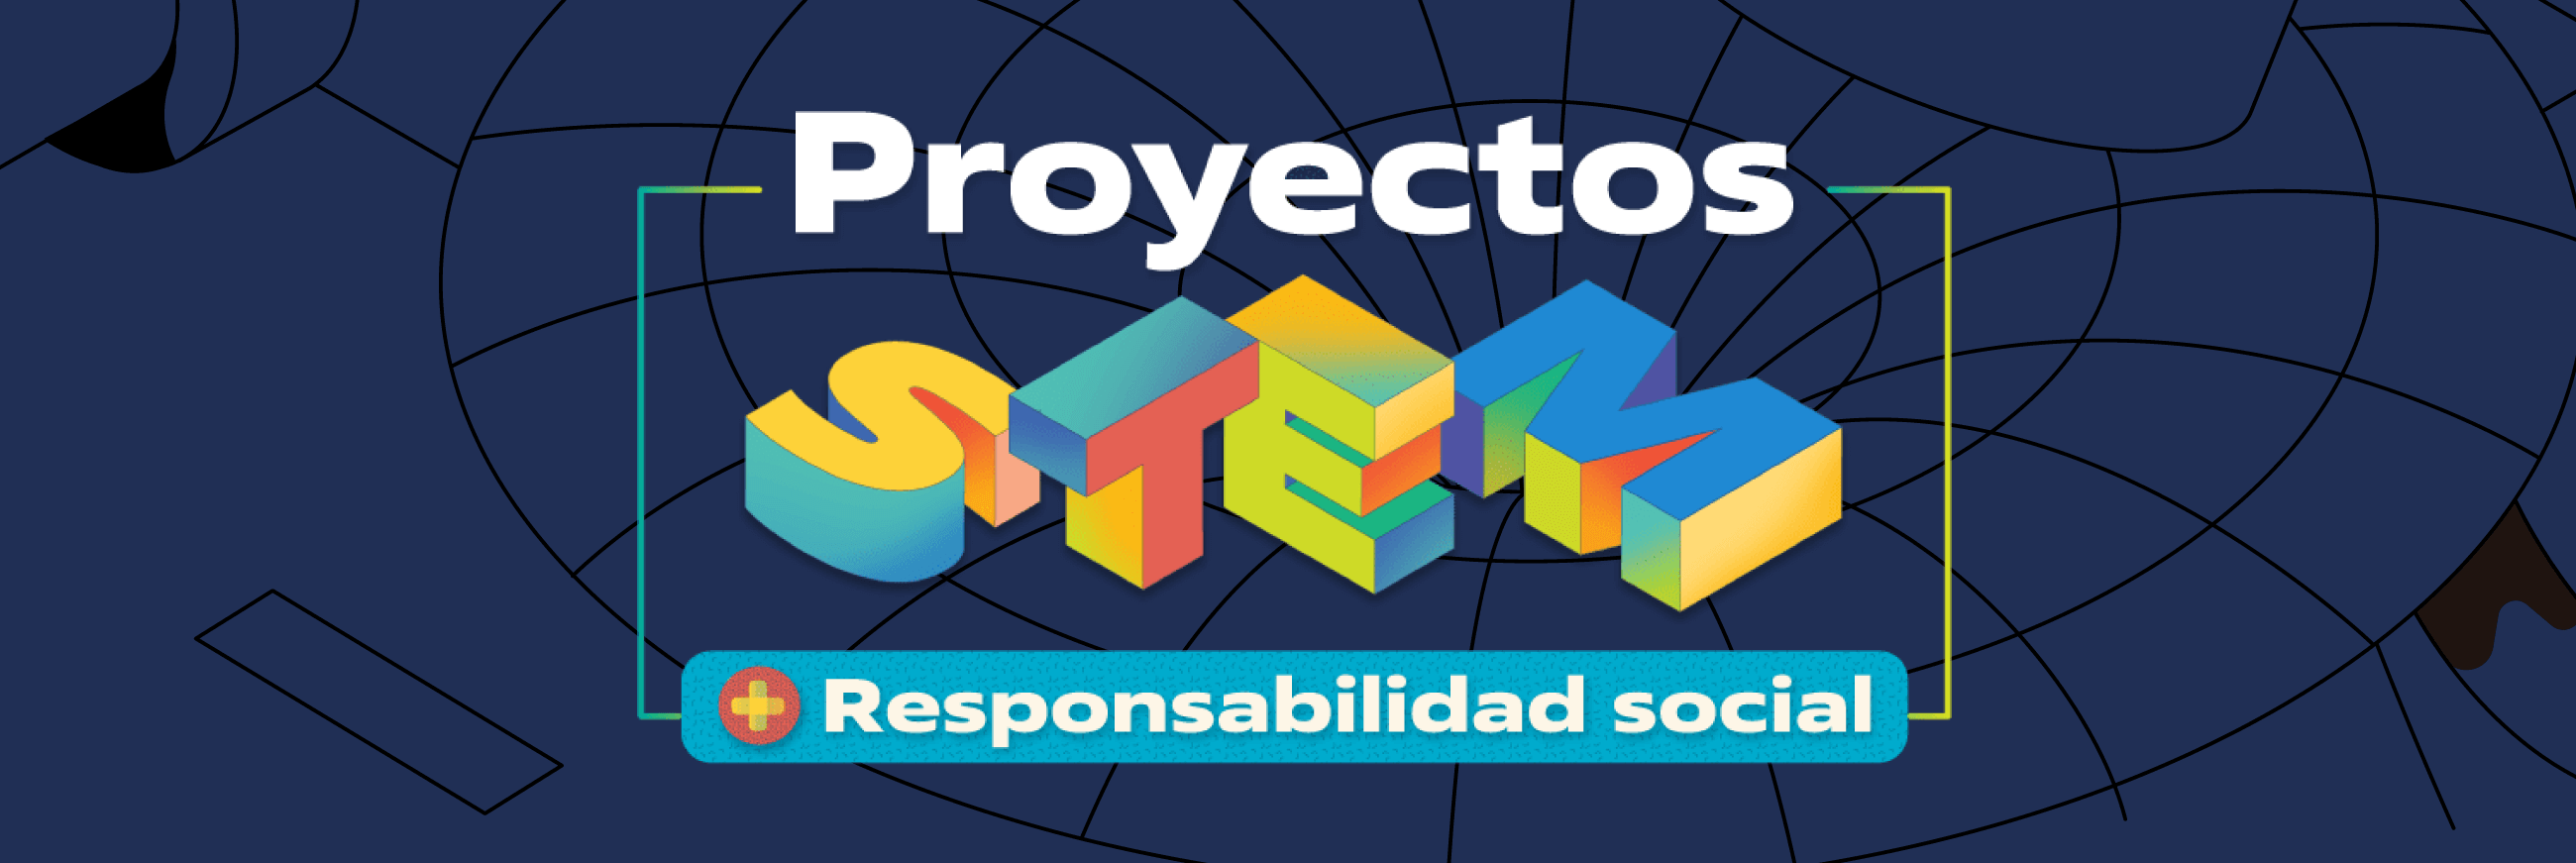 banner-proyectos-stem.png